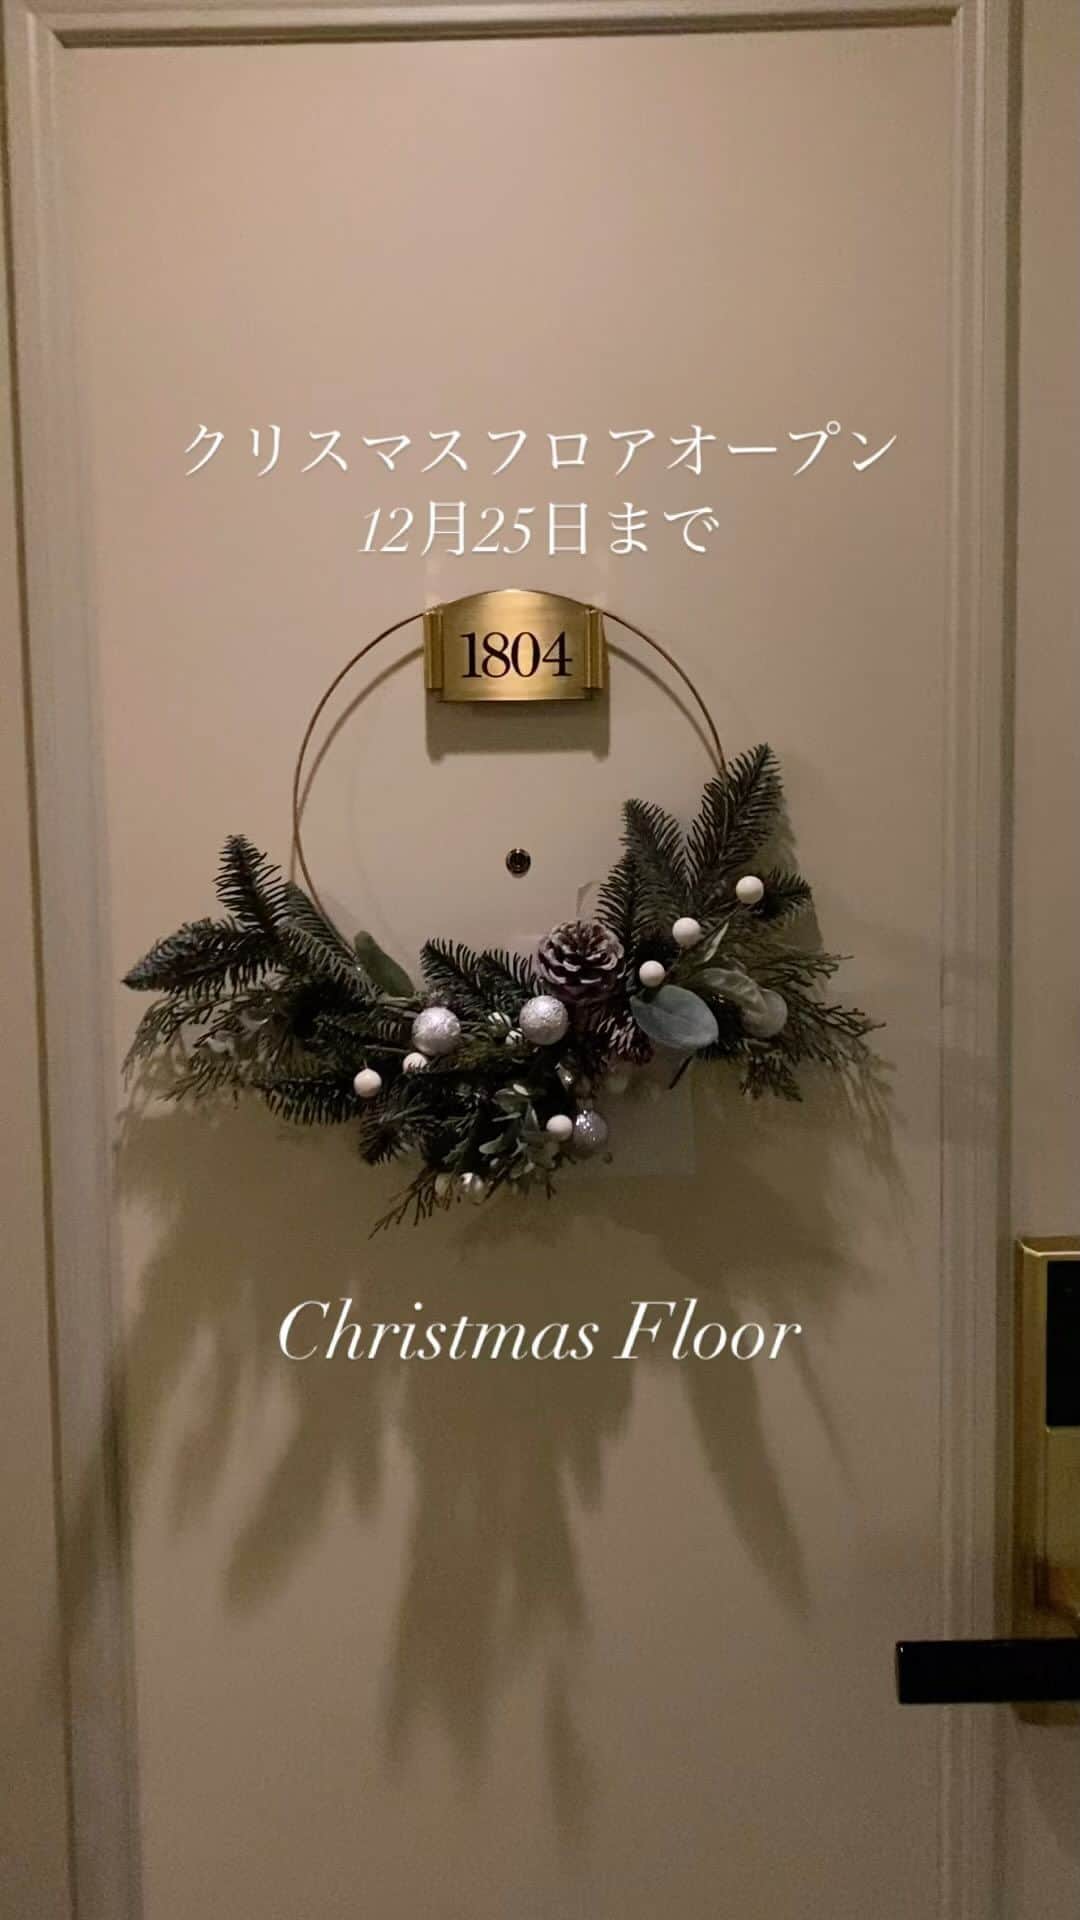 InterContinental Tokyo Bayのインスタグラム：「. 18階にクリスマスフロアがオープン🎄 お部屋には、クリスマスツリーと雪の結晶のプロジェクターライトが設置され、クリスマス気分を盛り上げます。  クリスマスステイプランでは、スパークリングワインとクリスマスケーキをもれなくご用意。 そのほか、朝食付きプラン、お部屋でクリスマスディナーを楽しめるプランなど、様々なプランをラインナップしております。  アーリークリスマスもおすすめです🎅  #intercontinentaltokyobay  #ホテルインターコンチネンタル東京ベイ  #インターコンチネンタル東京ベイ  #intercontinentaltokyobay  #クリスマス #christmas #クリスマスデート #クリスマスステイプラン #クリスマス女子会  #クリスマスツリー #クリスマスケーキ  #クリスマス演出 #クリスマスパーティー #クリパ #東京湾 #レインボーブリッジ  #ベイビュー #レインボーブリッジ夜景 #rainbowbridge #nightview  #隅田川 #隅田川夜景 #リバービュー #海が見えるホテル #リトルマンハッタン」